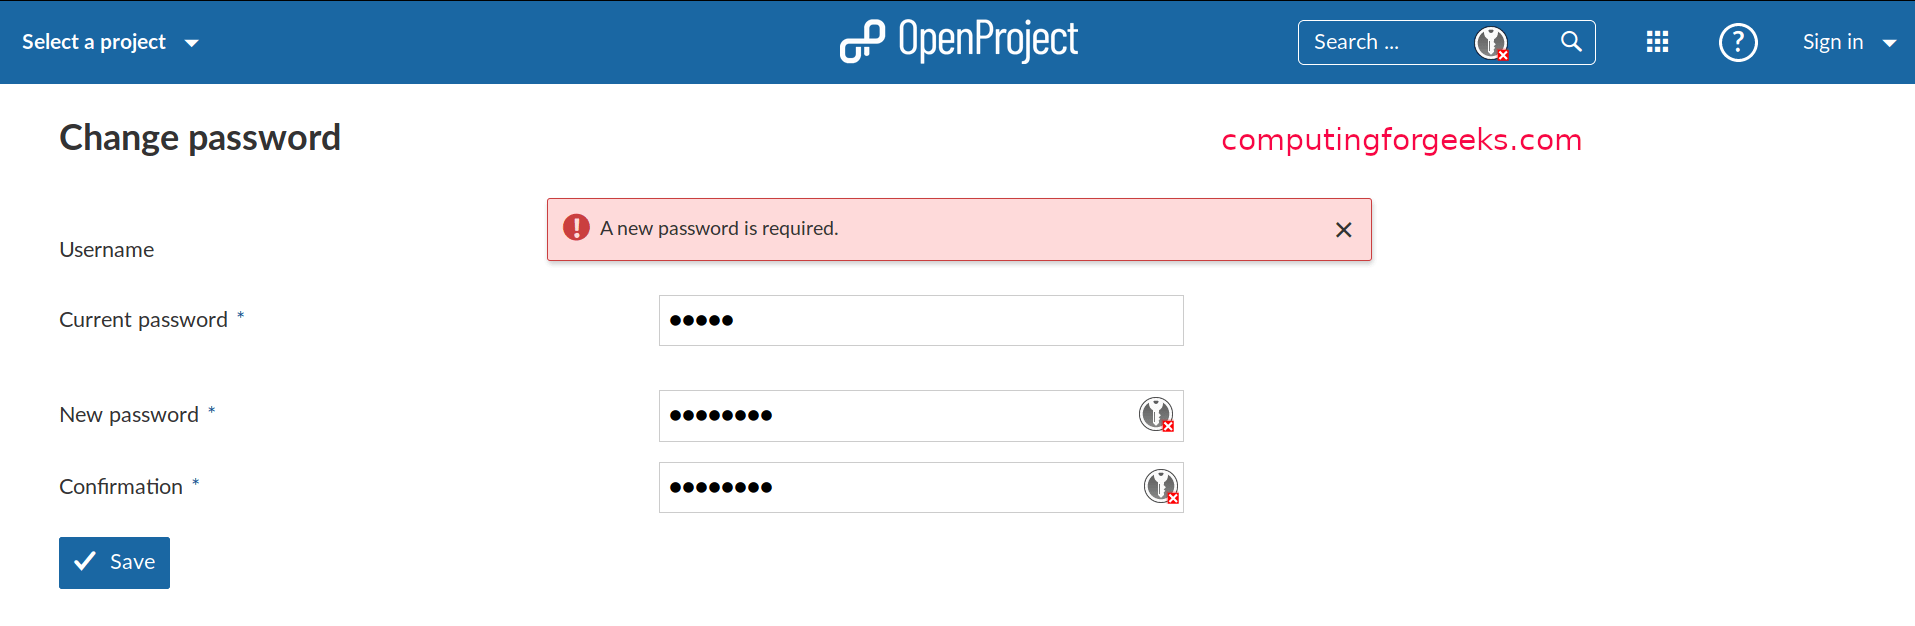 openproject community edition